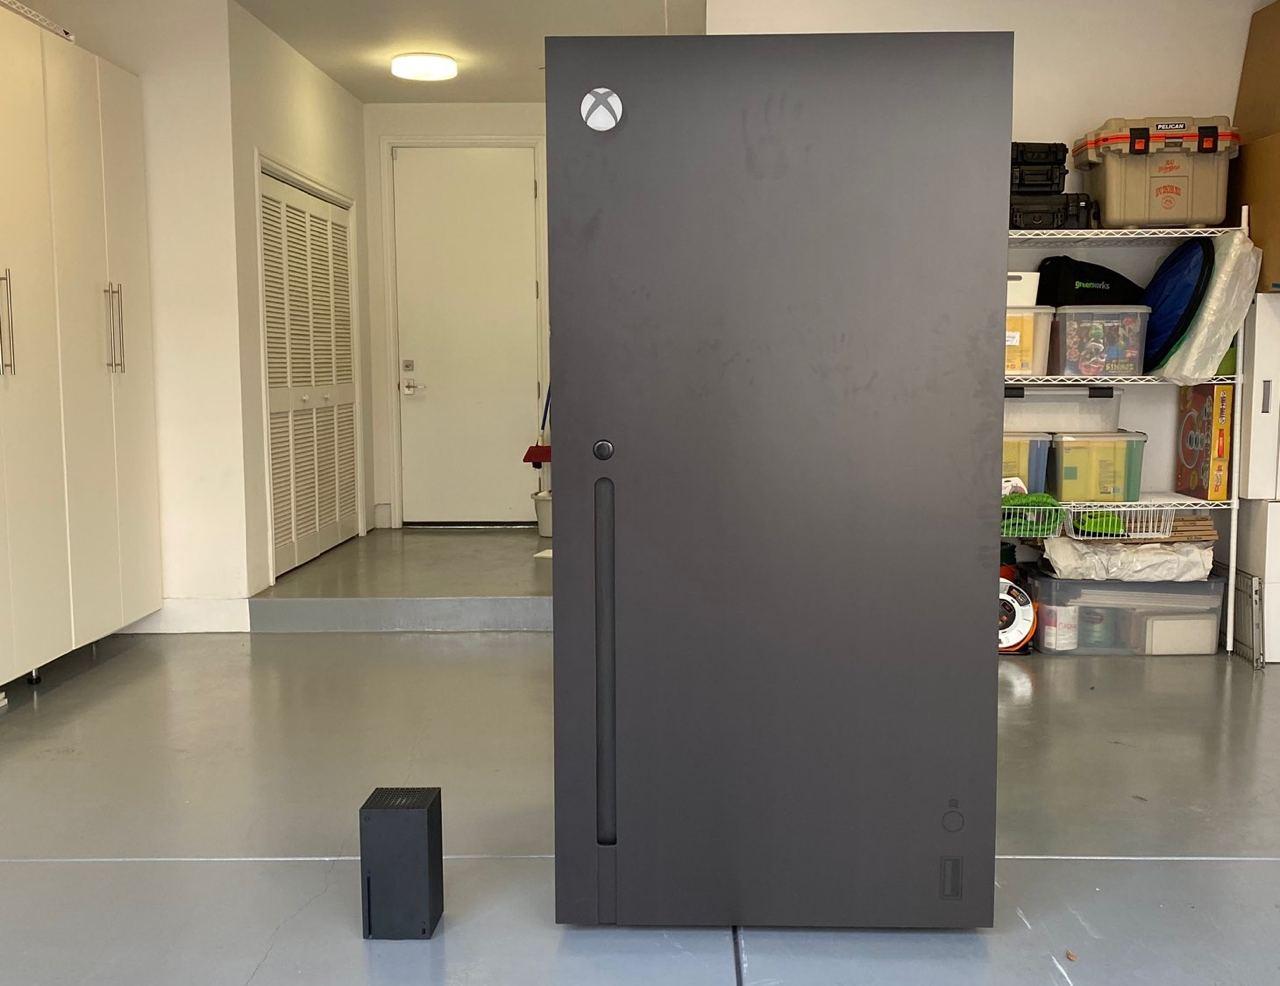 new xbox looks like a fridge